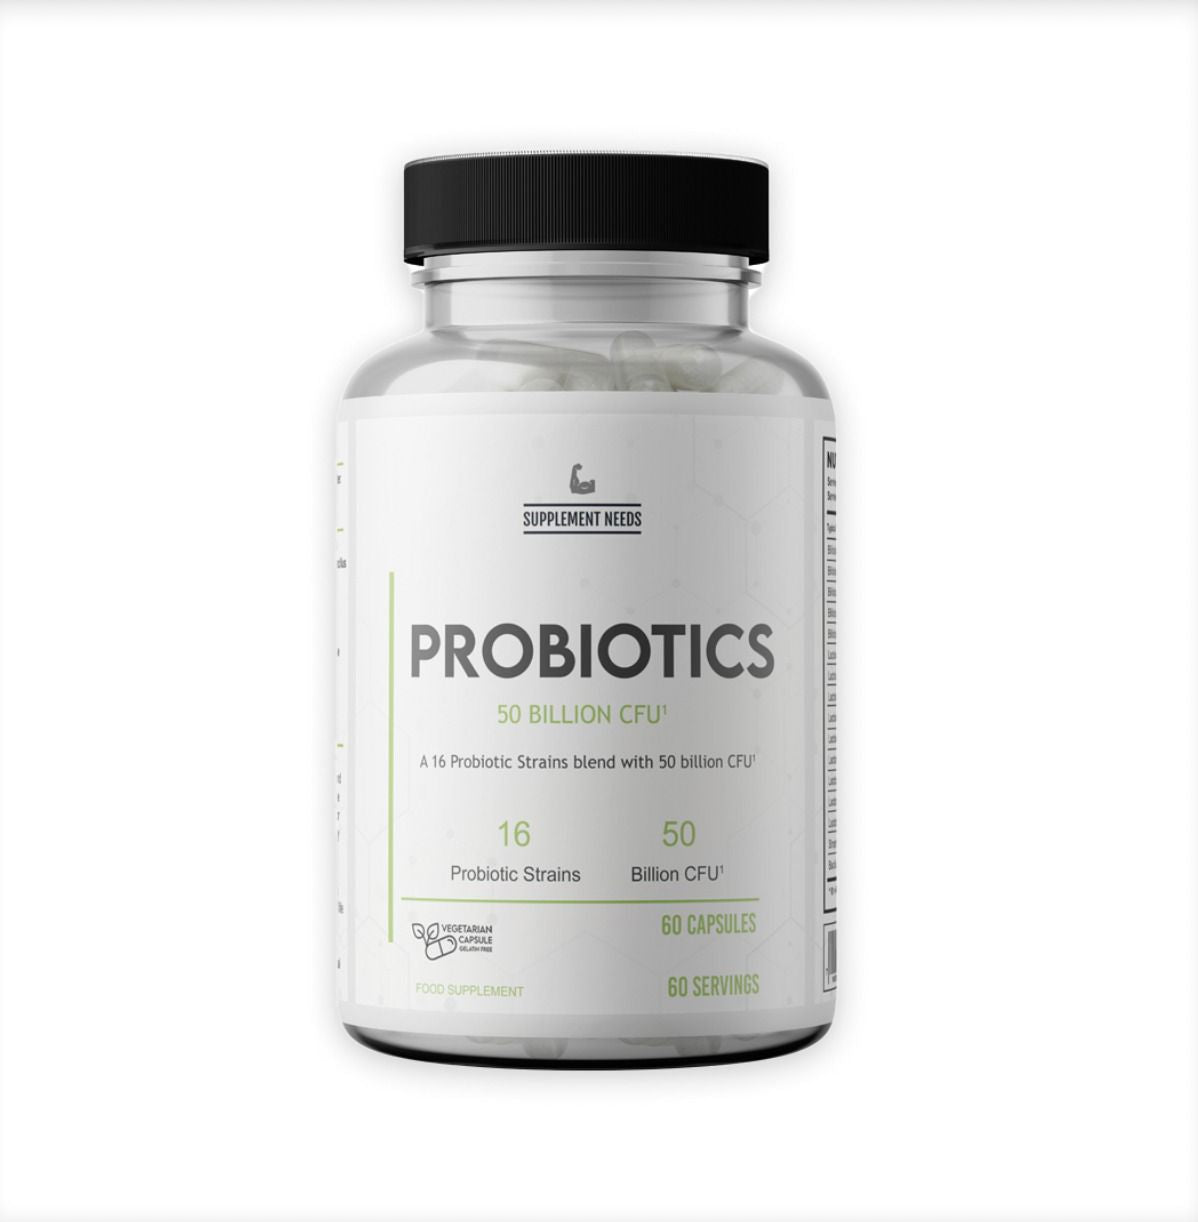 Supplement Needs Probiotics - 50 Billion CFU - Updated Formula